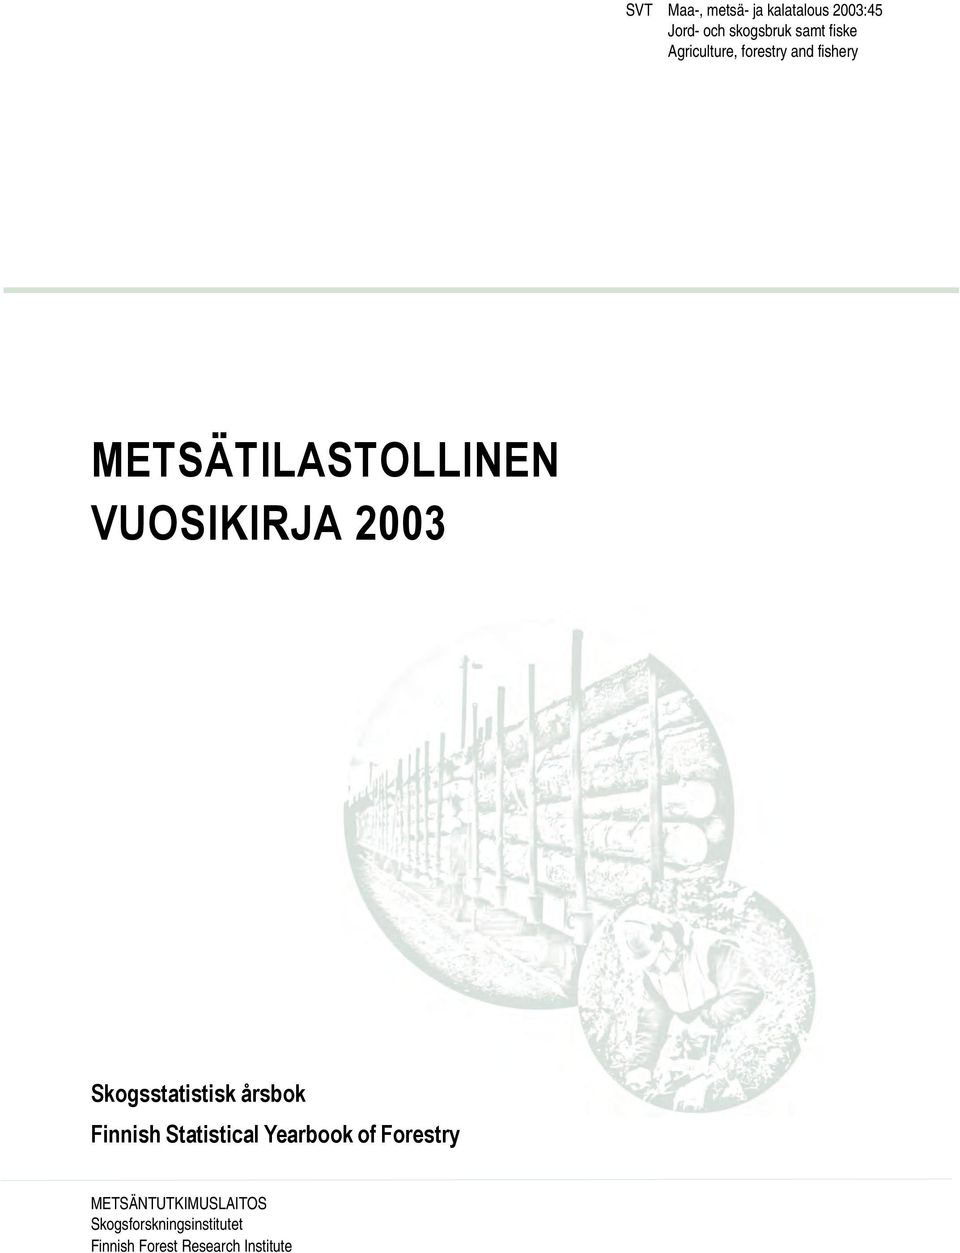 Skogsstatistisk årsbok Finnish Statistical Yearbook of Forestry